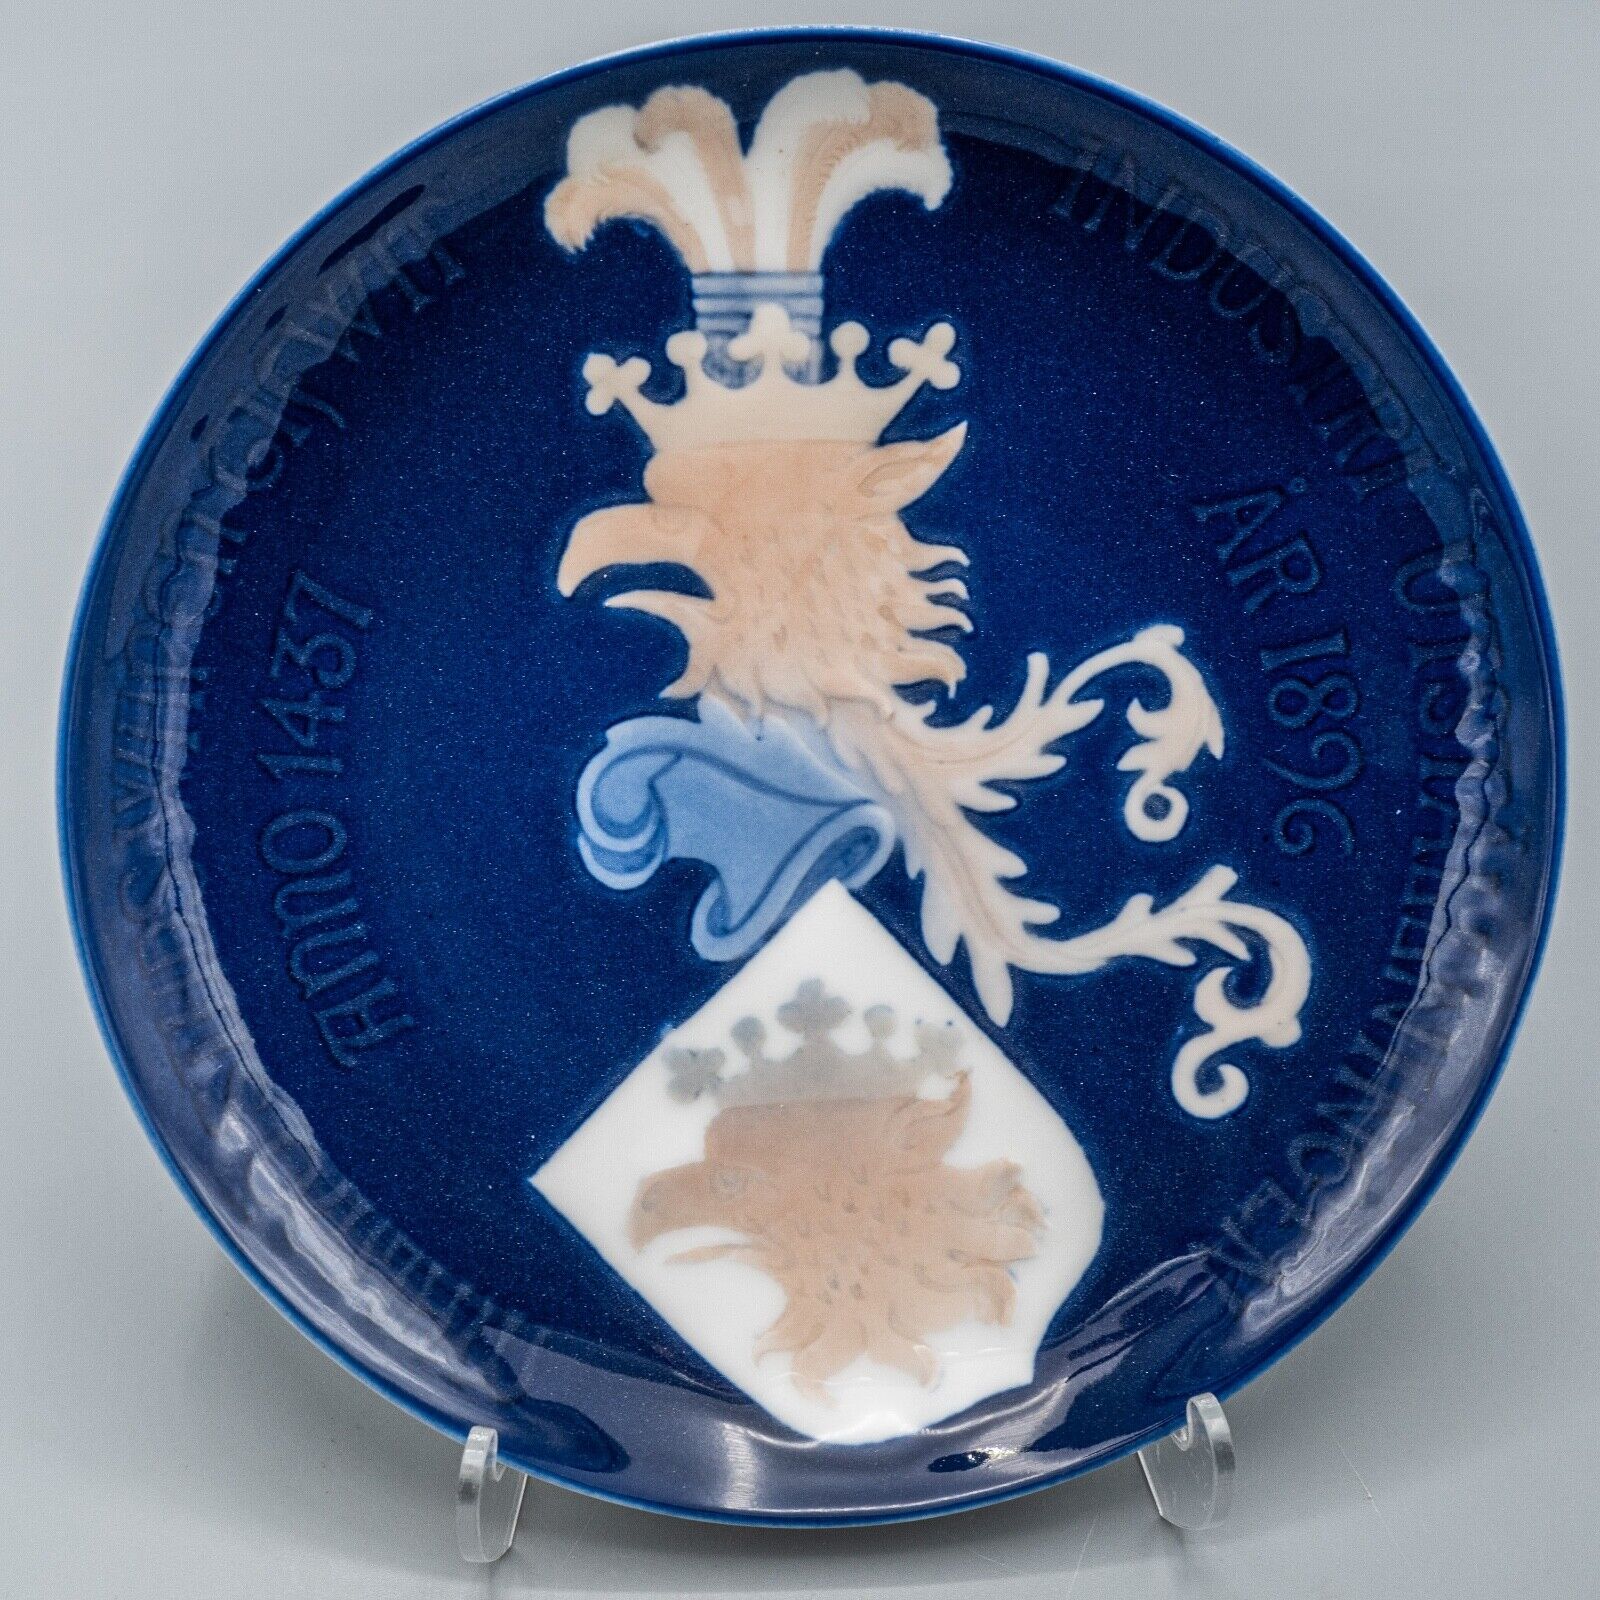 Bing & Grondahl – B&G – 1437 1896 Industrial Exhibition Plate